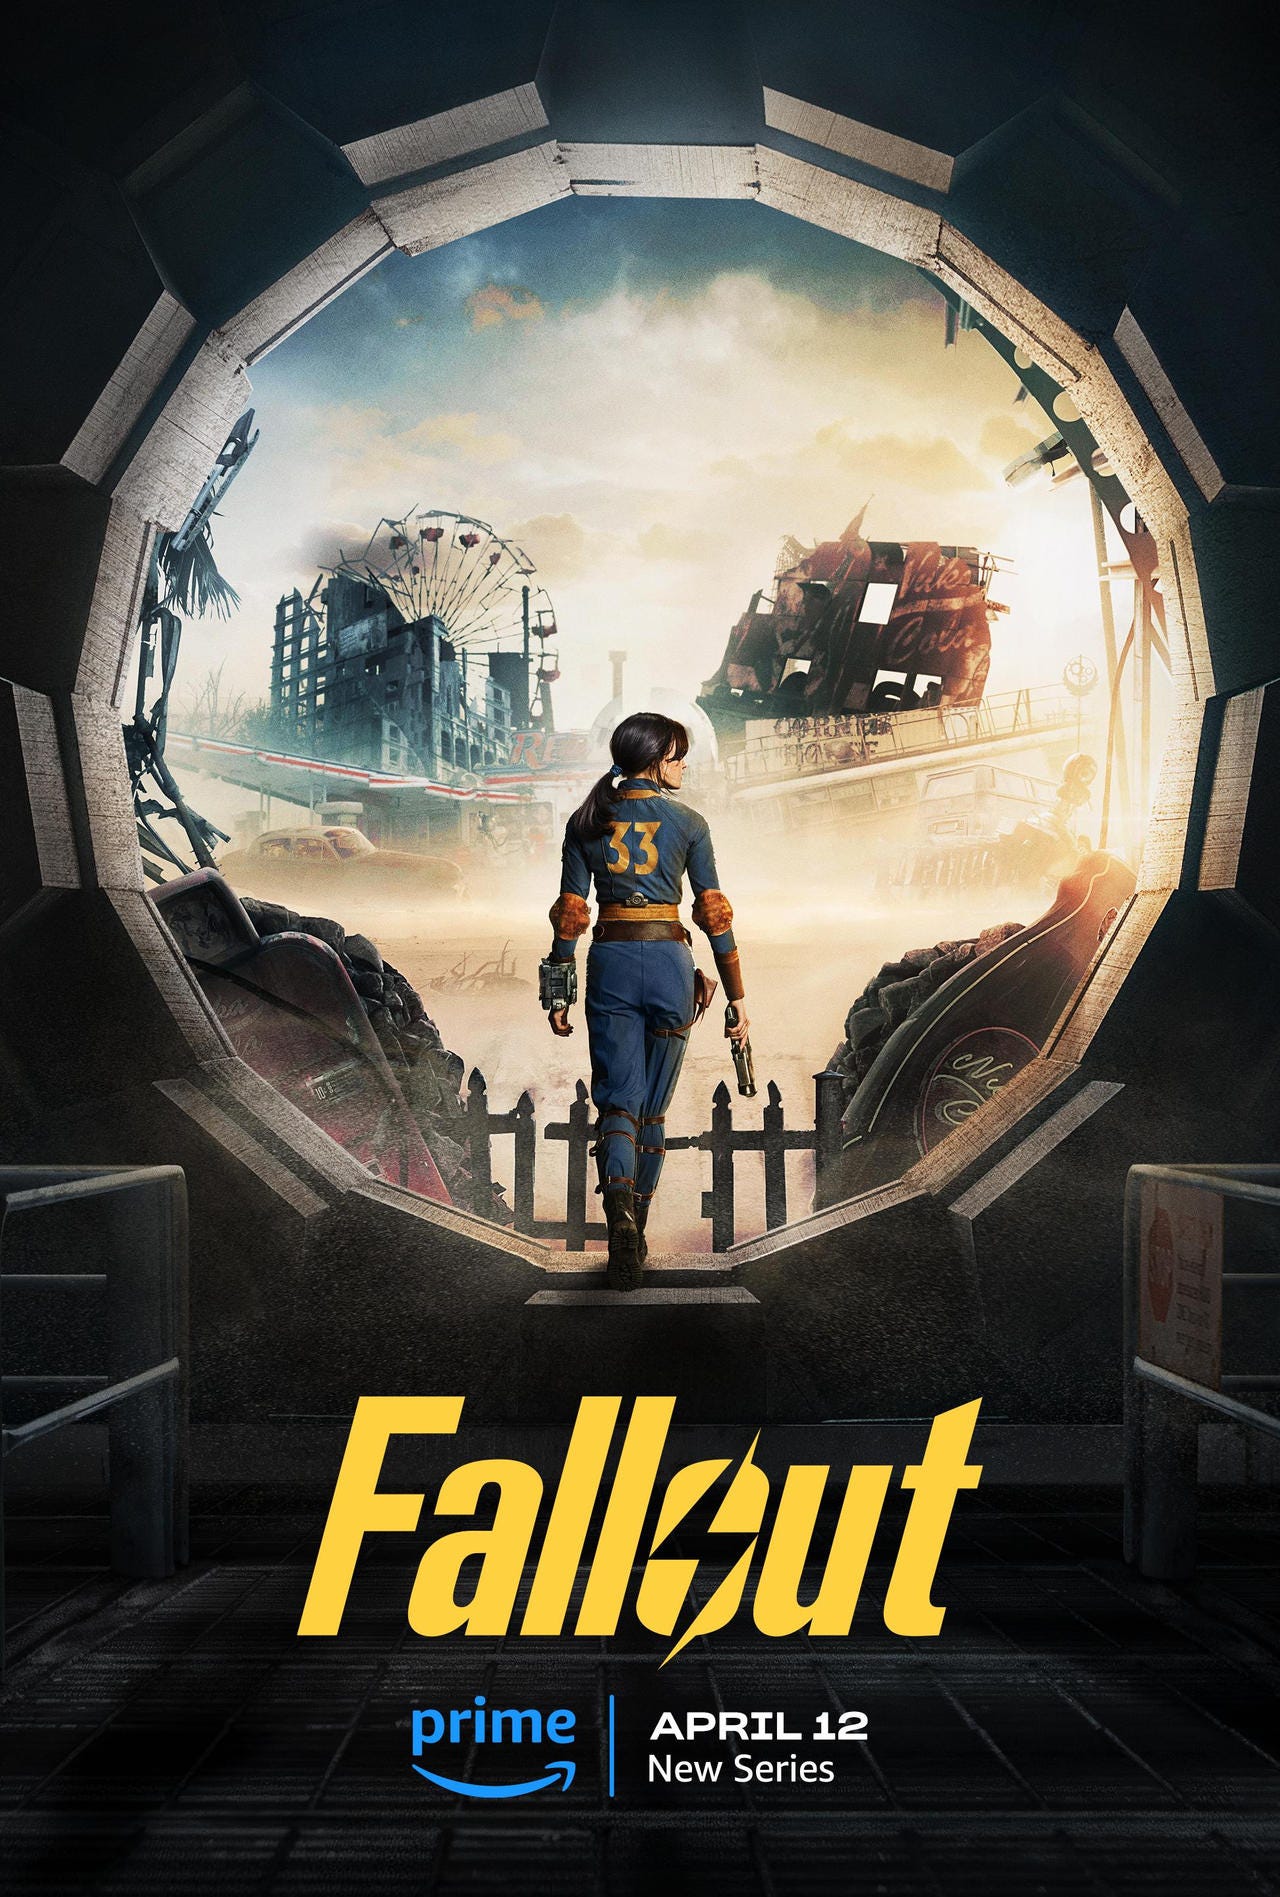 Fallout Amazon by GamingLegacy94 on DeviantArt